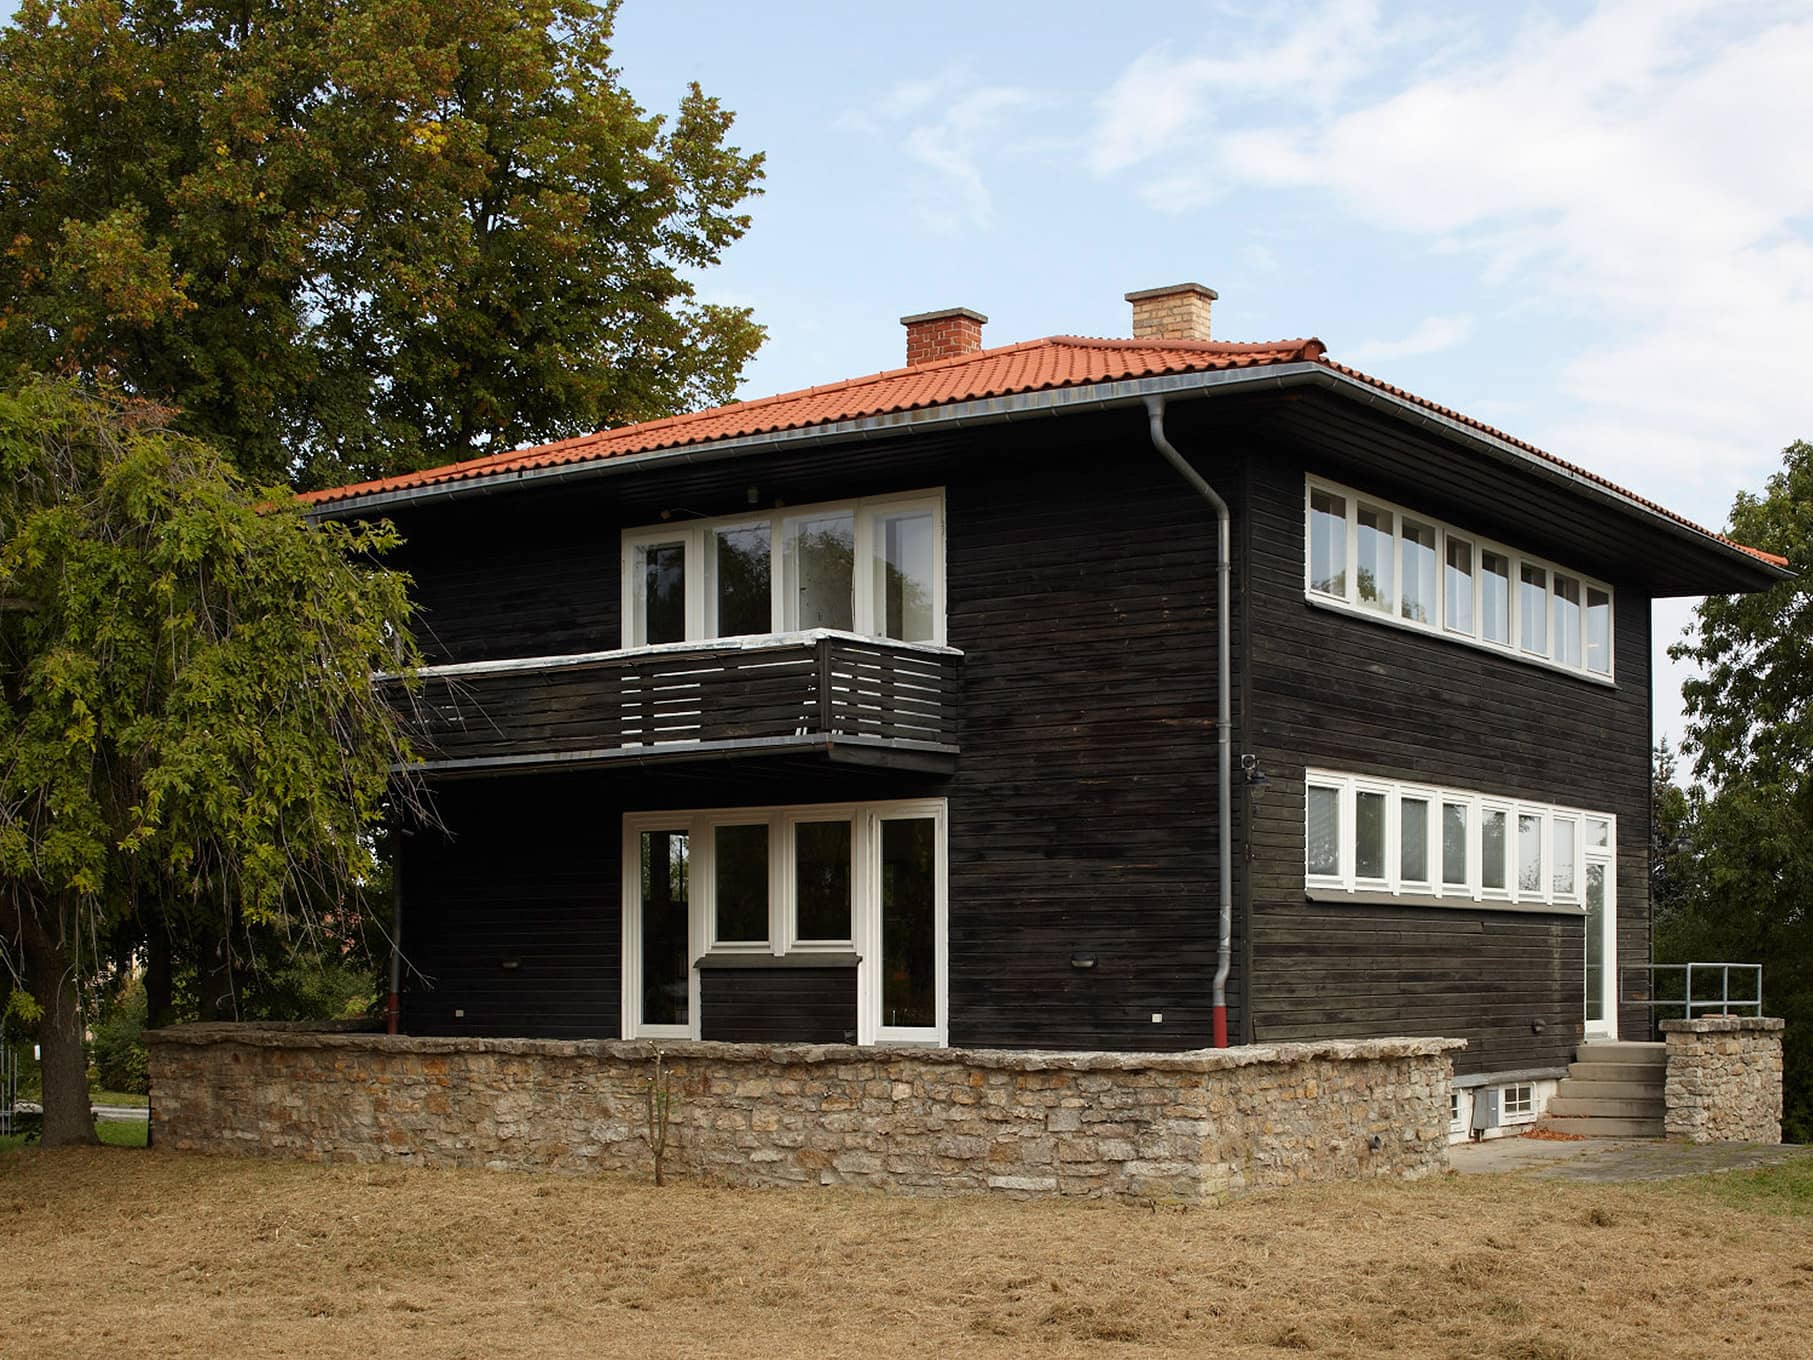 The restored “Neufert House”, Weimar